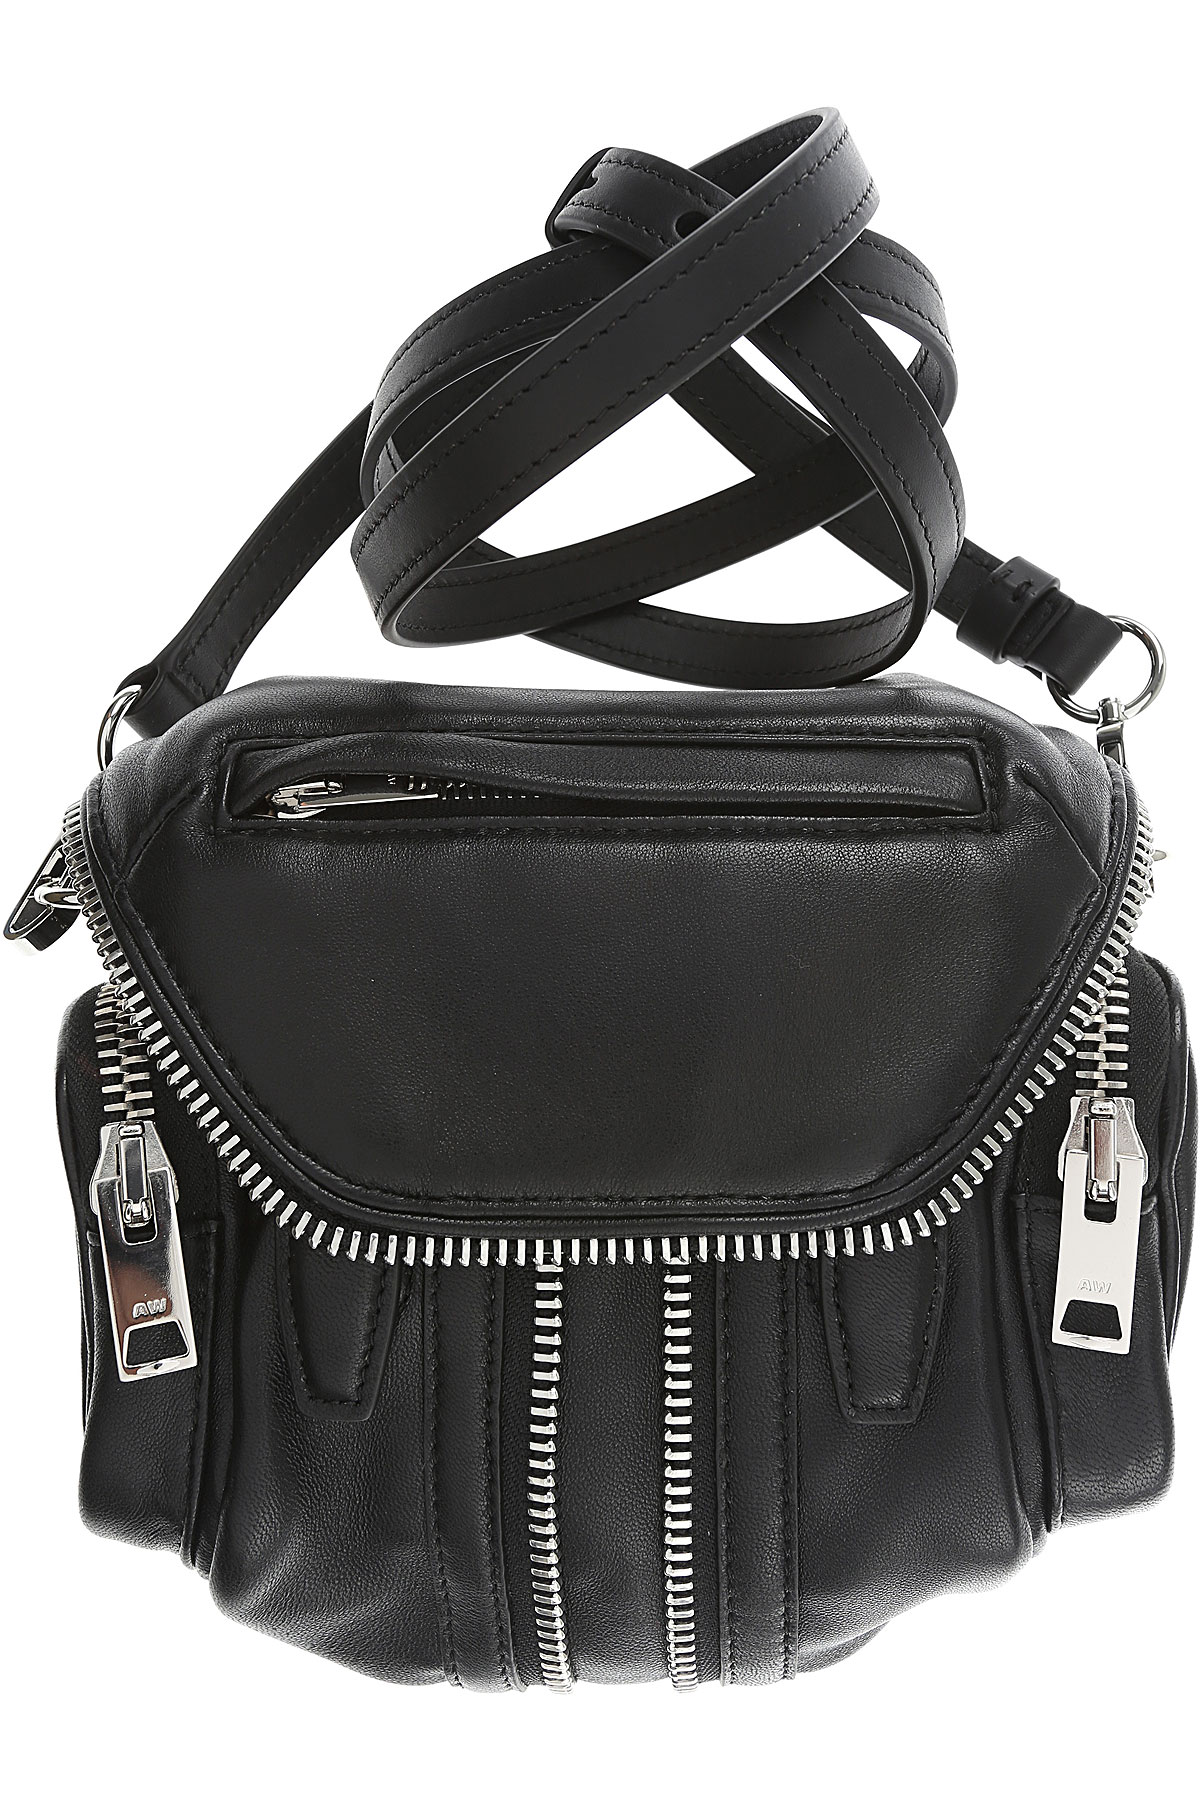 Handbags Alexander Wang, Style code: 2028x0539l-001-